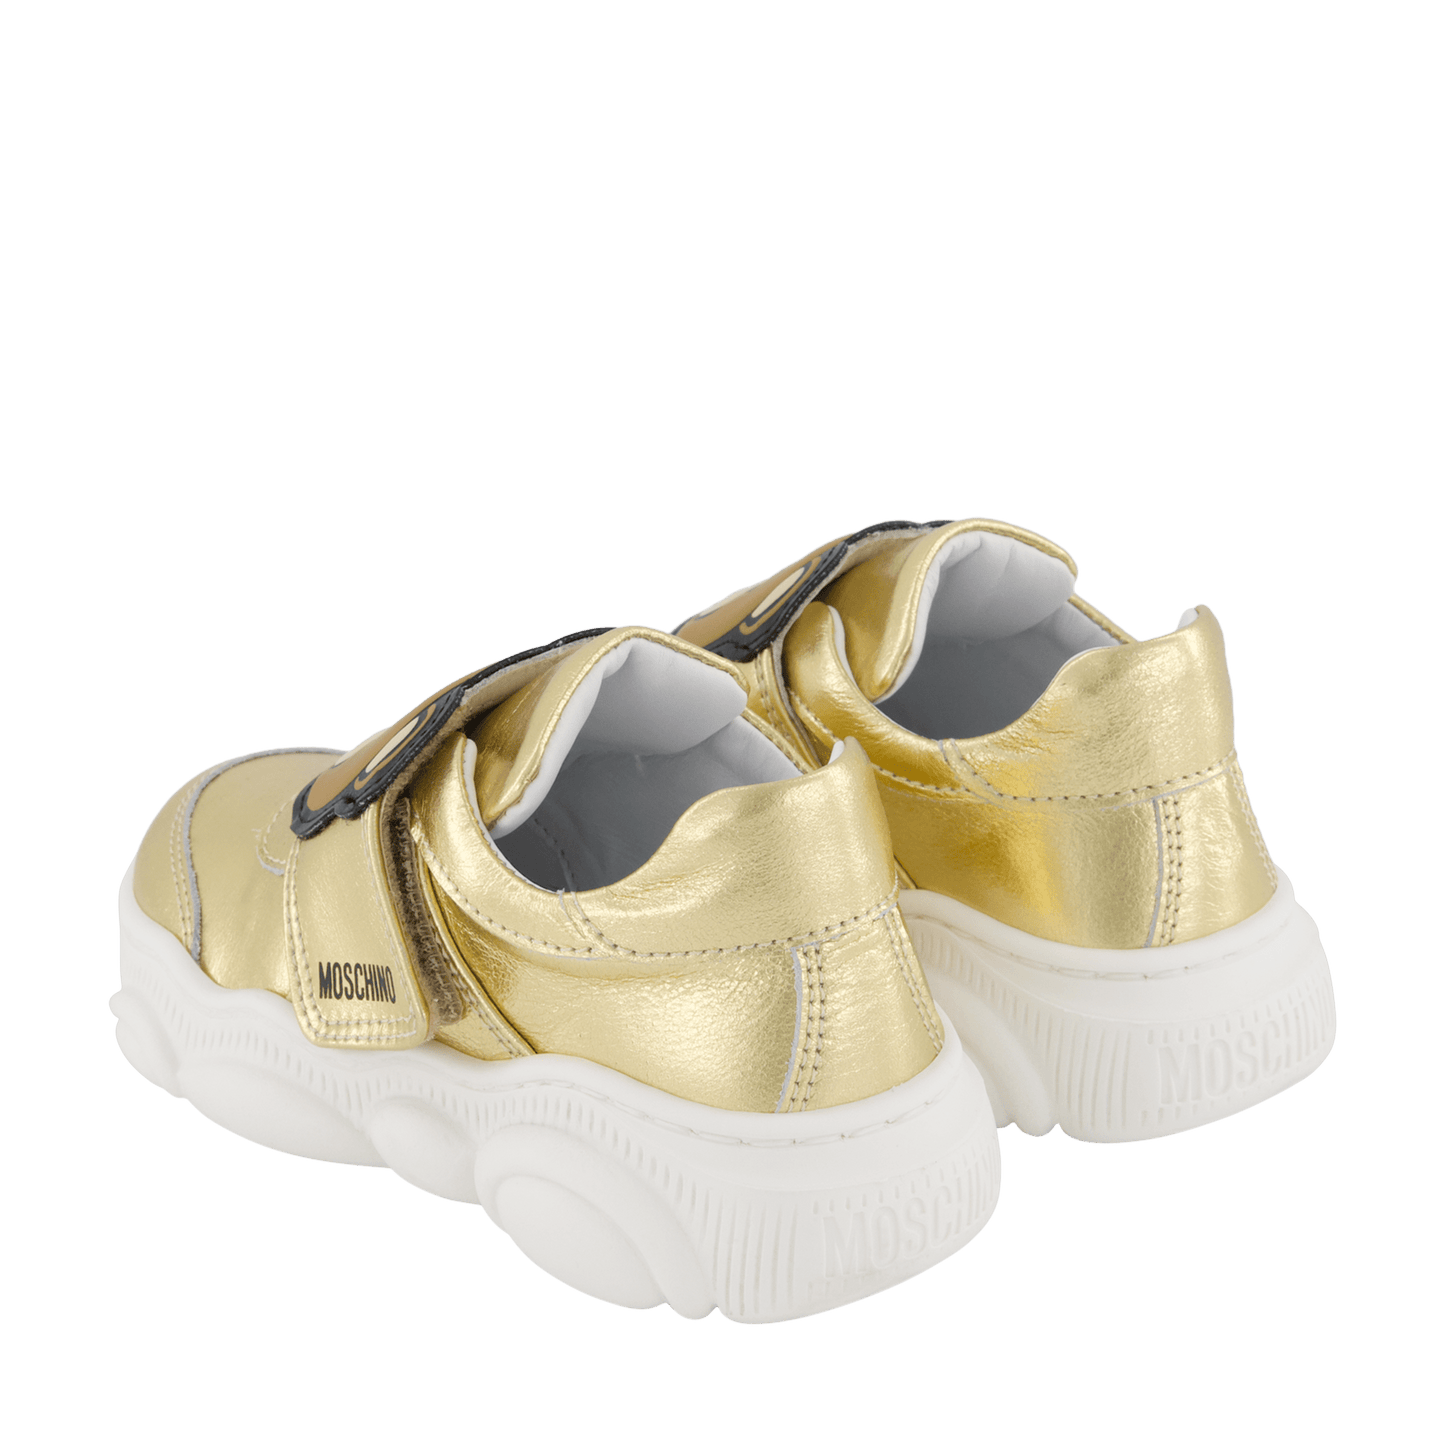 Moschino Kinder Meisjes Sneakers Goud 19